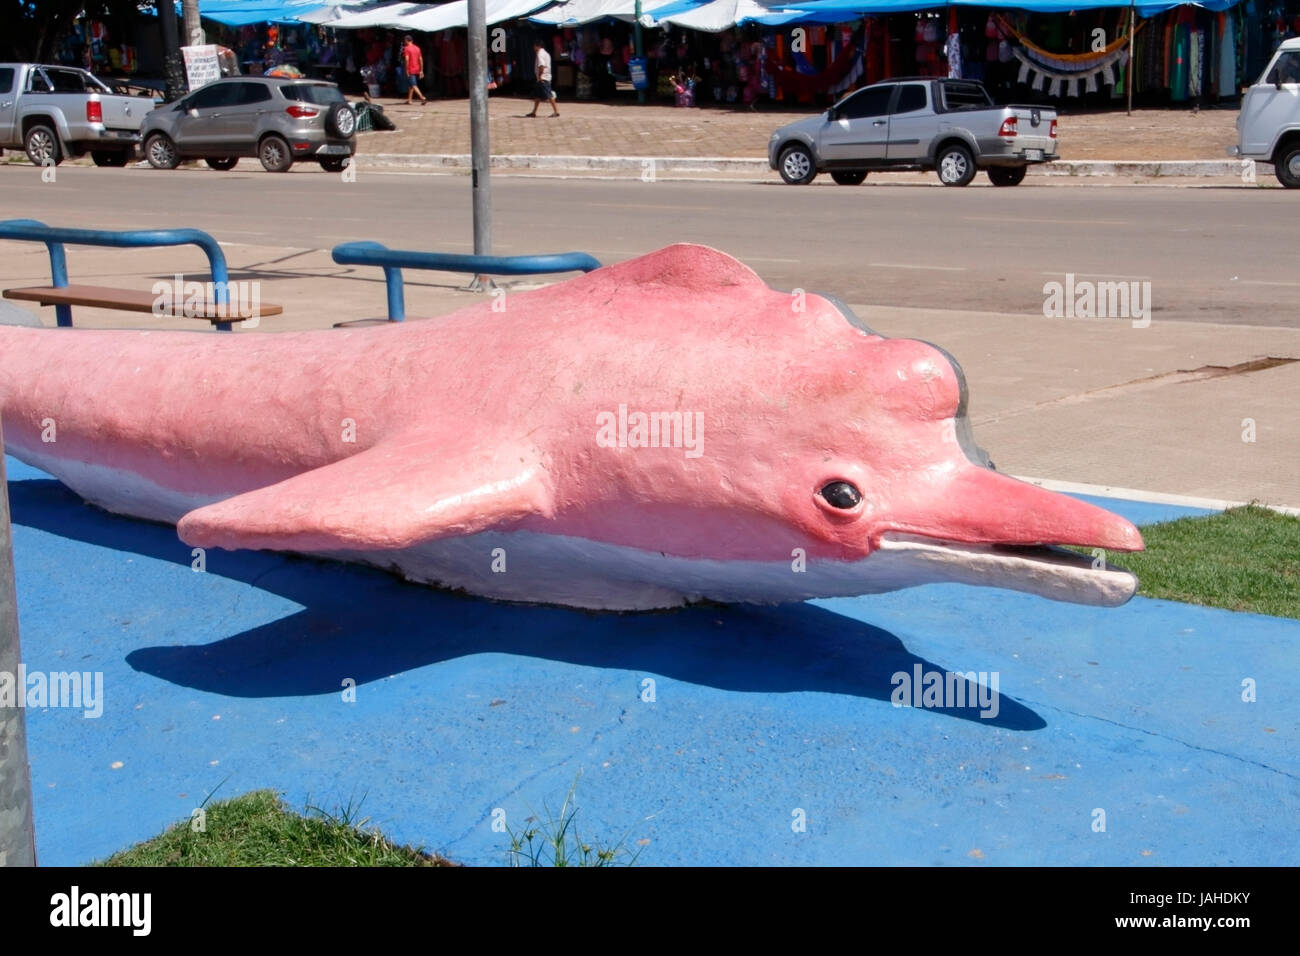 model of Amazon pink river dolphin, on pavement in Santarem, Brazil Stock Photo